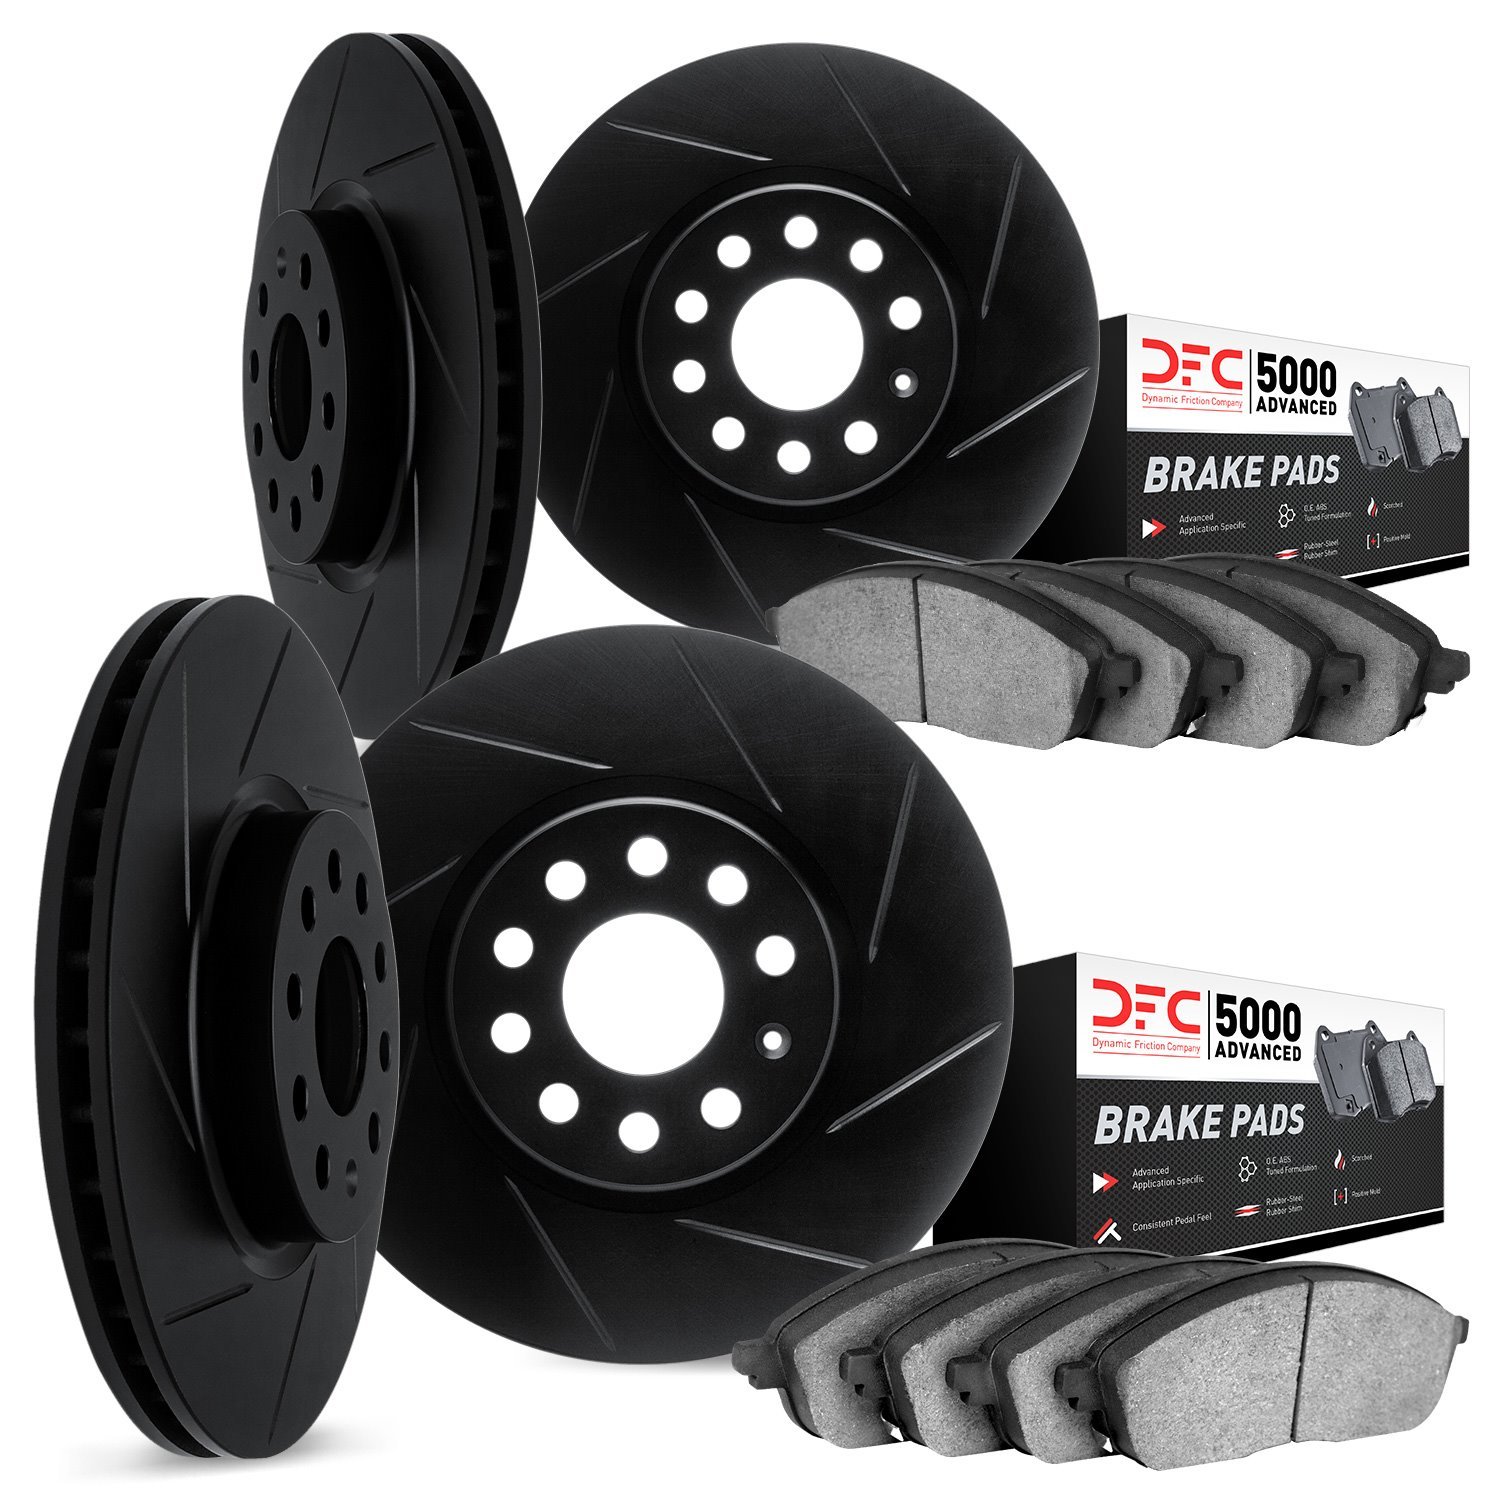 3514-40027 Slotted Brake Rotors w/5000 Advanced Brake Pads Kit & Hardware [Black], 2006-2018 Mopar, Position: Front and Rear